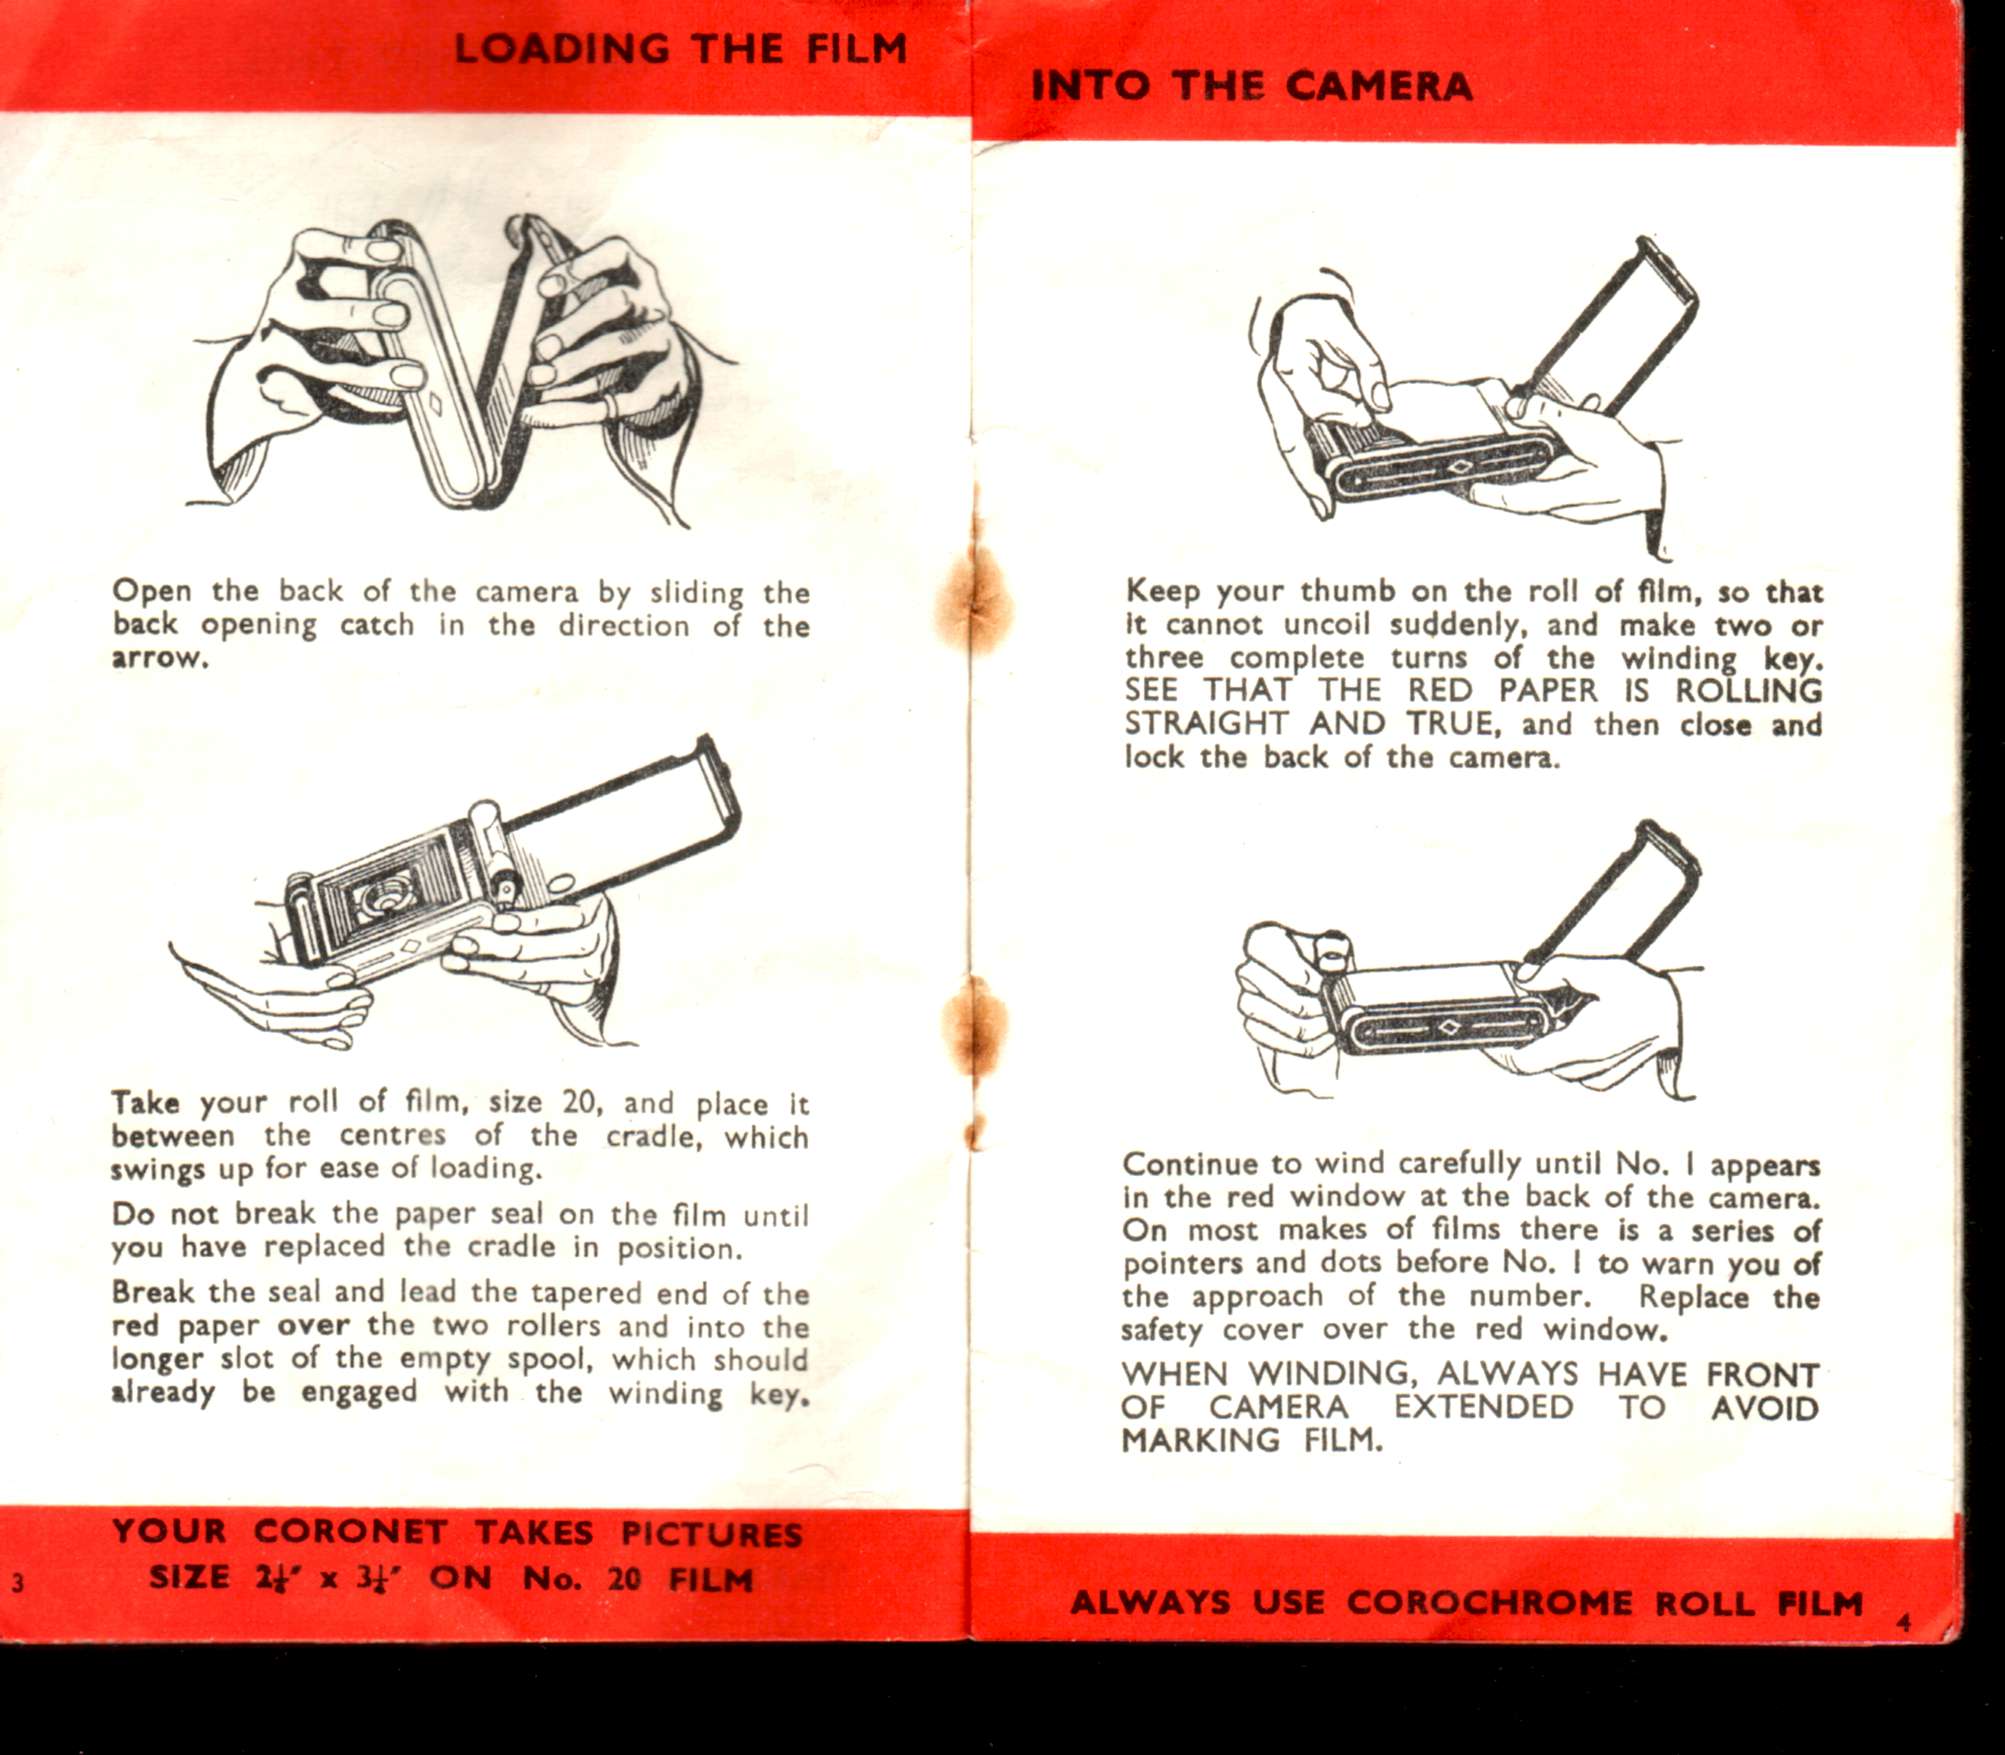 Coronet Clipper Instruction Manual